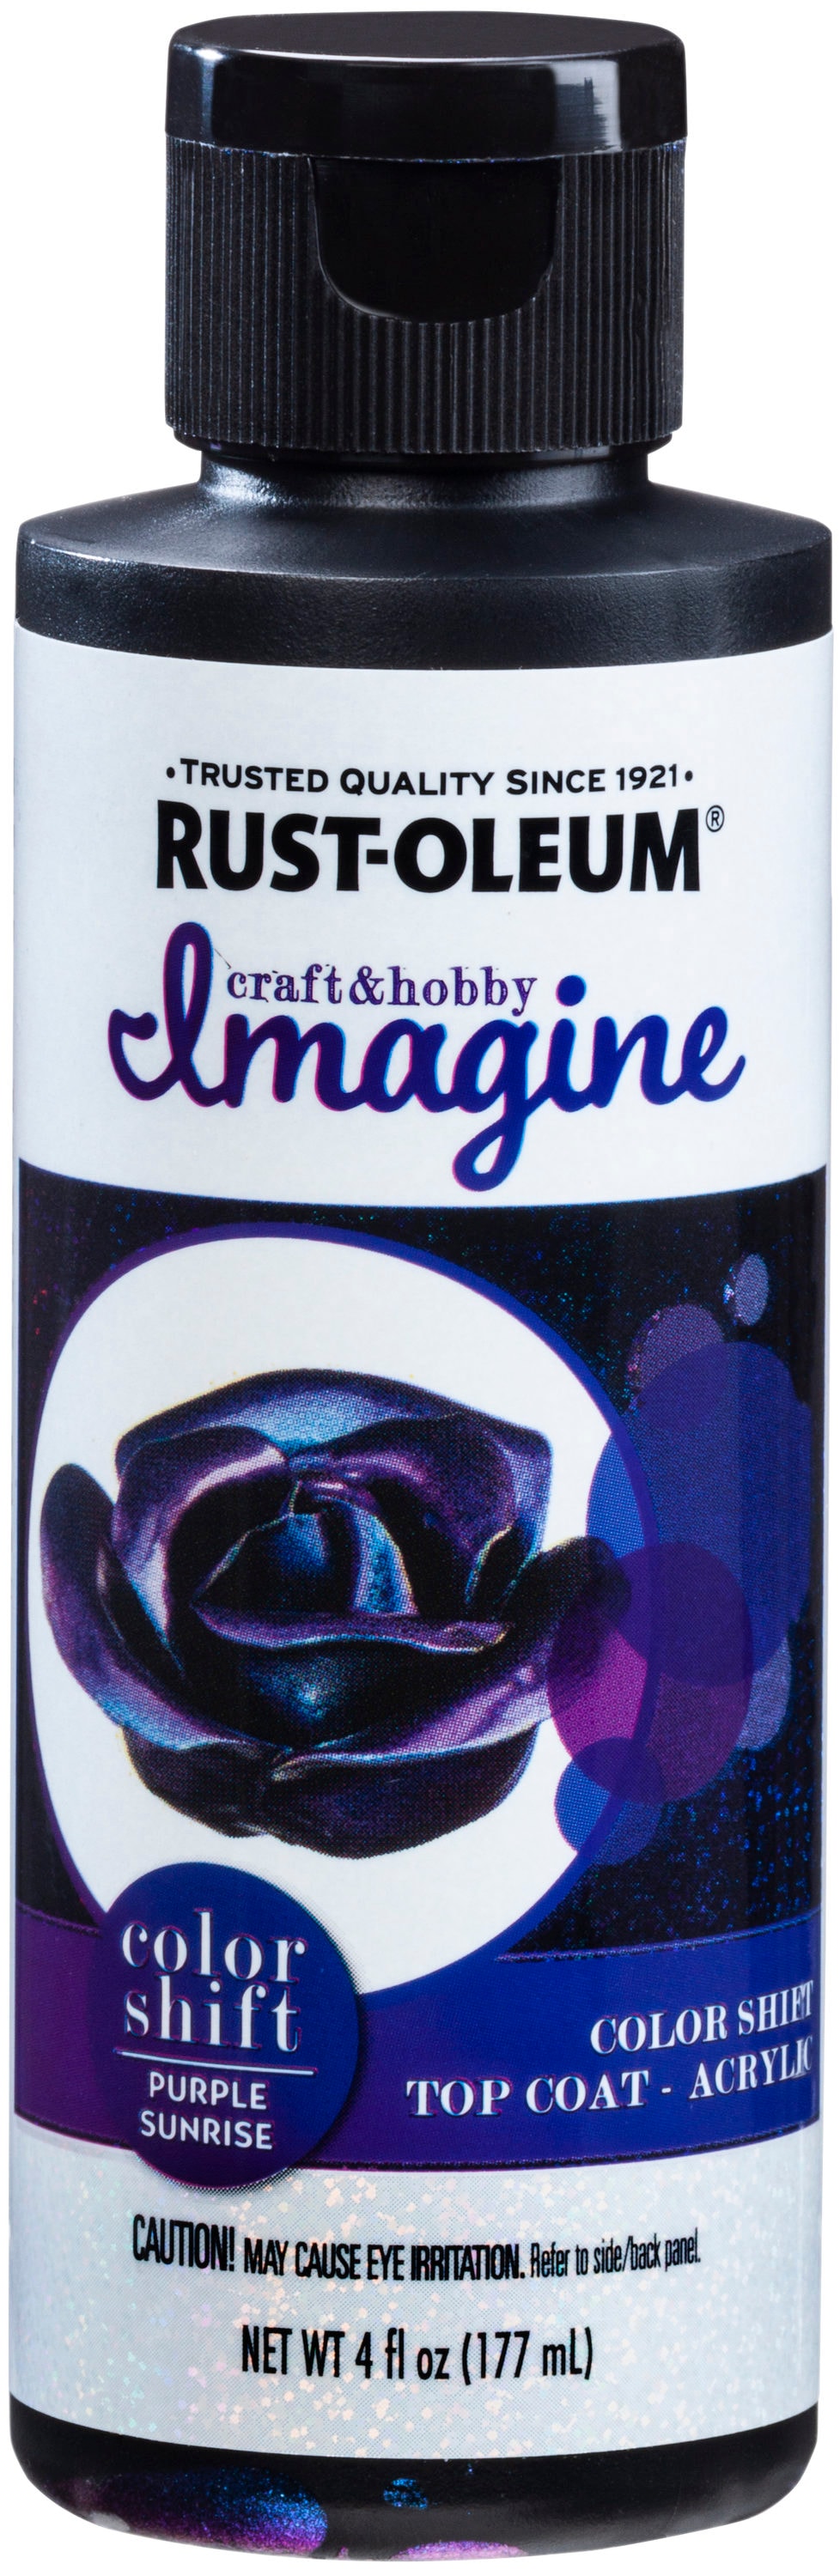 Rust-Oleum® Imagine Craft & Hobby Color Shift Purple Sunrise Spray Paint -  11 oz at Menards®